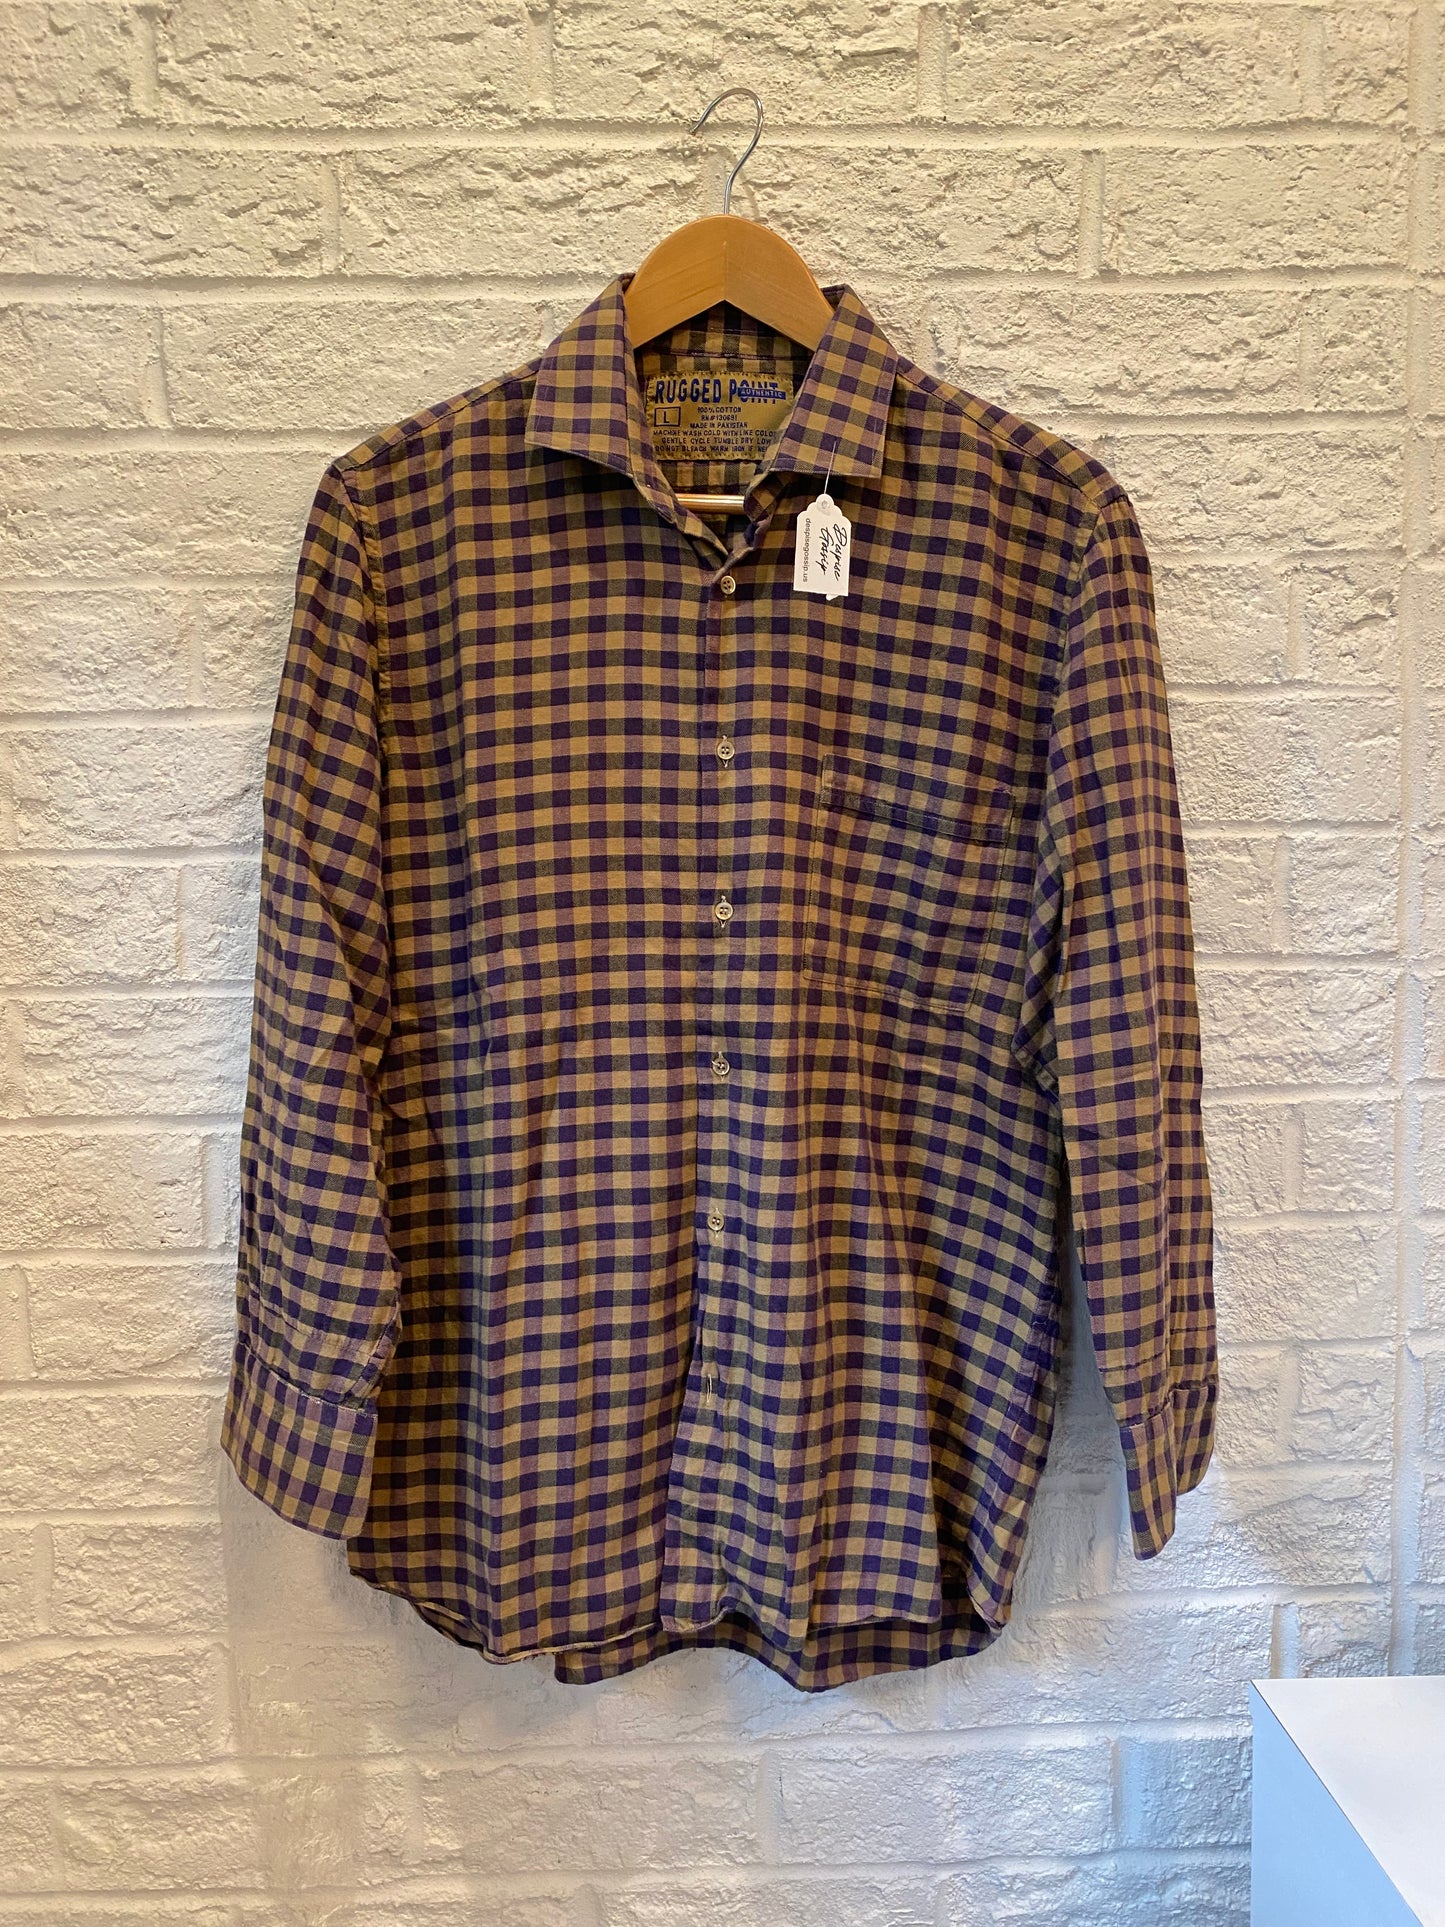 Vintage 80S Purple Checkered Shirt | L